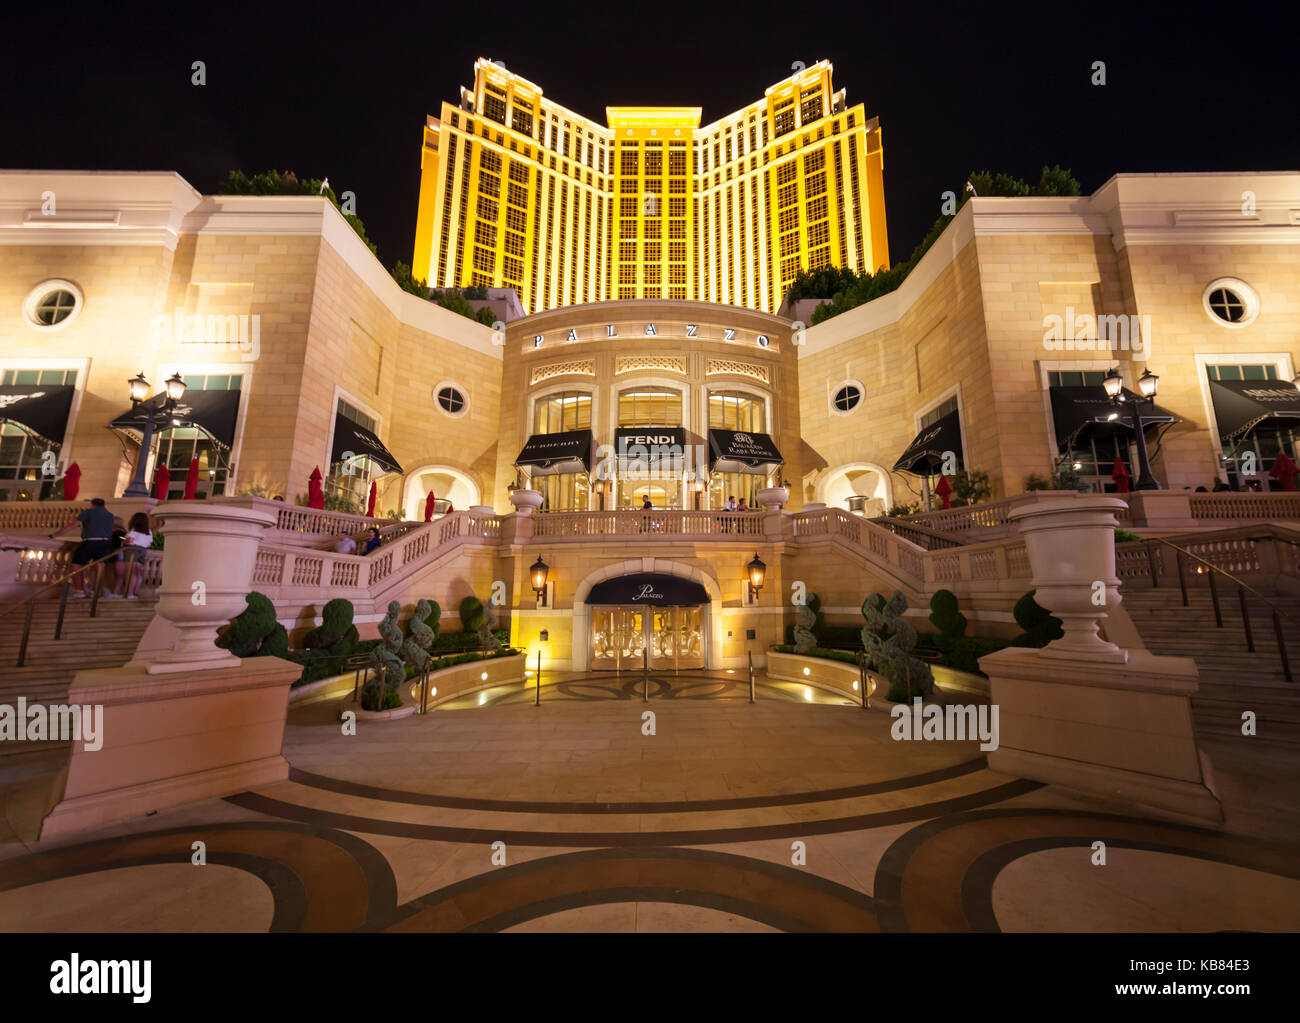 A  nighttime view of the Palazzo Hotel on Las Vegas Blvd in Las Vegas, Nevada. Stock Photo